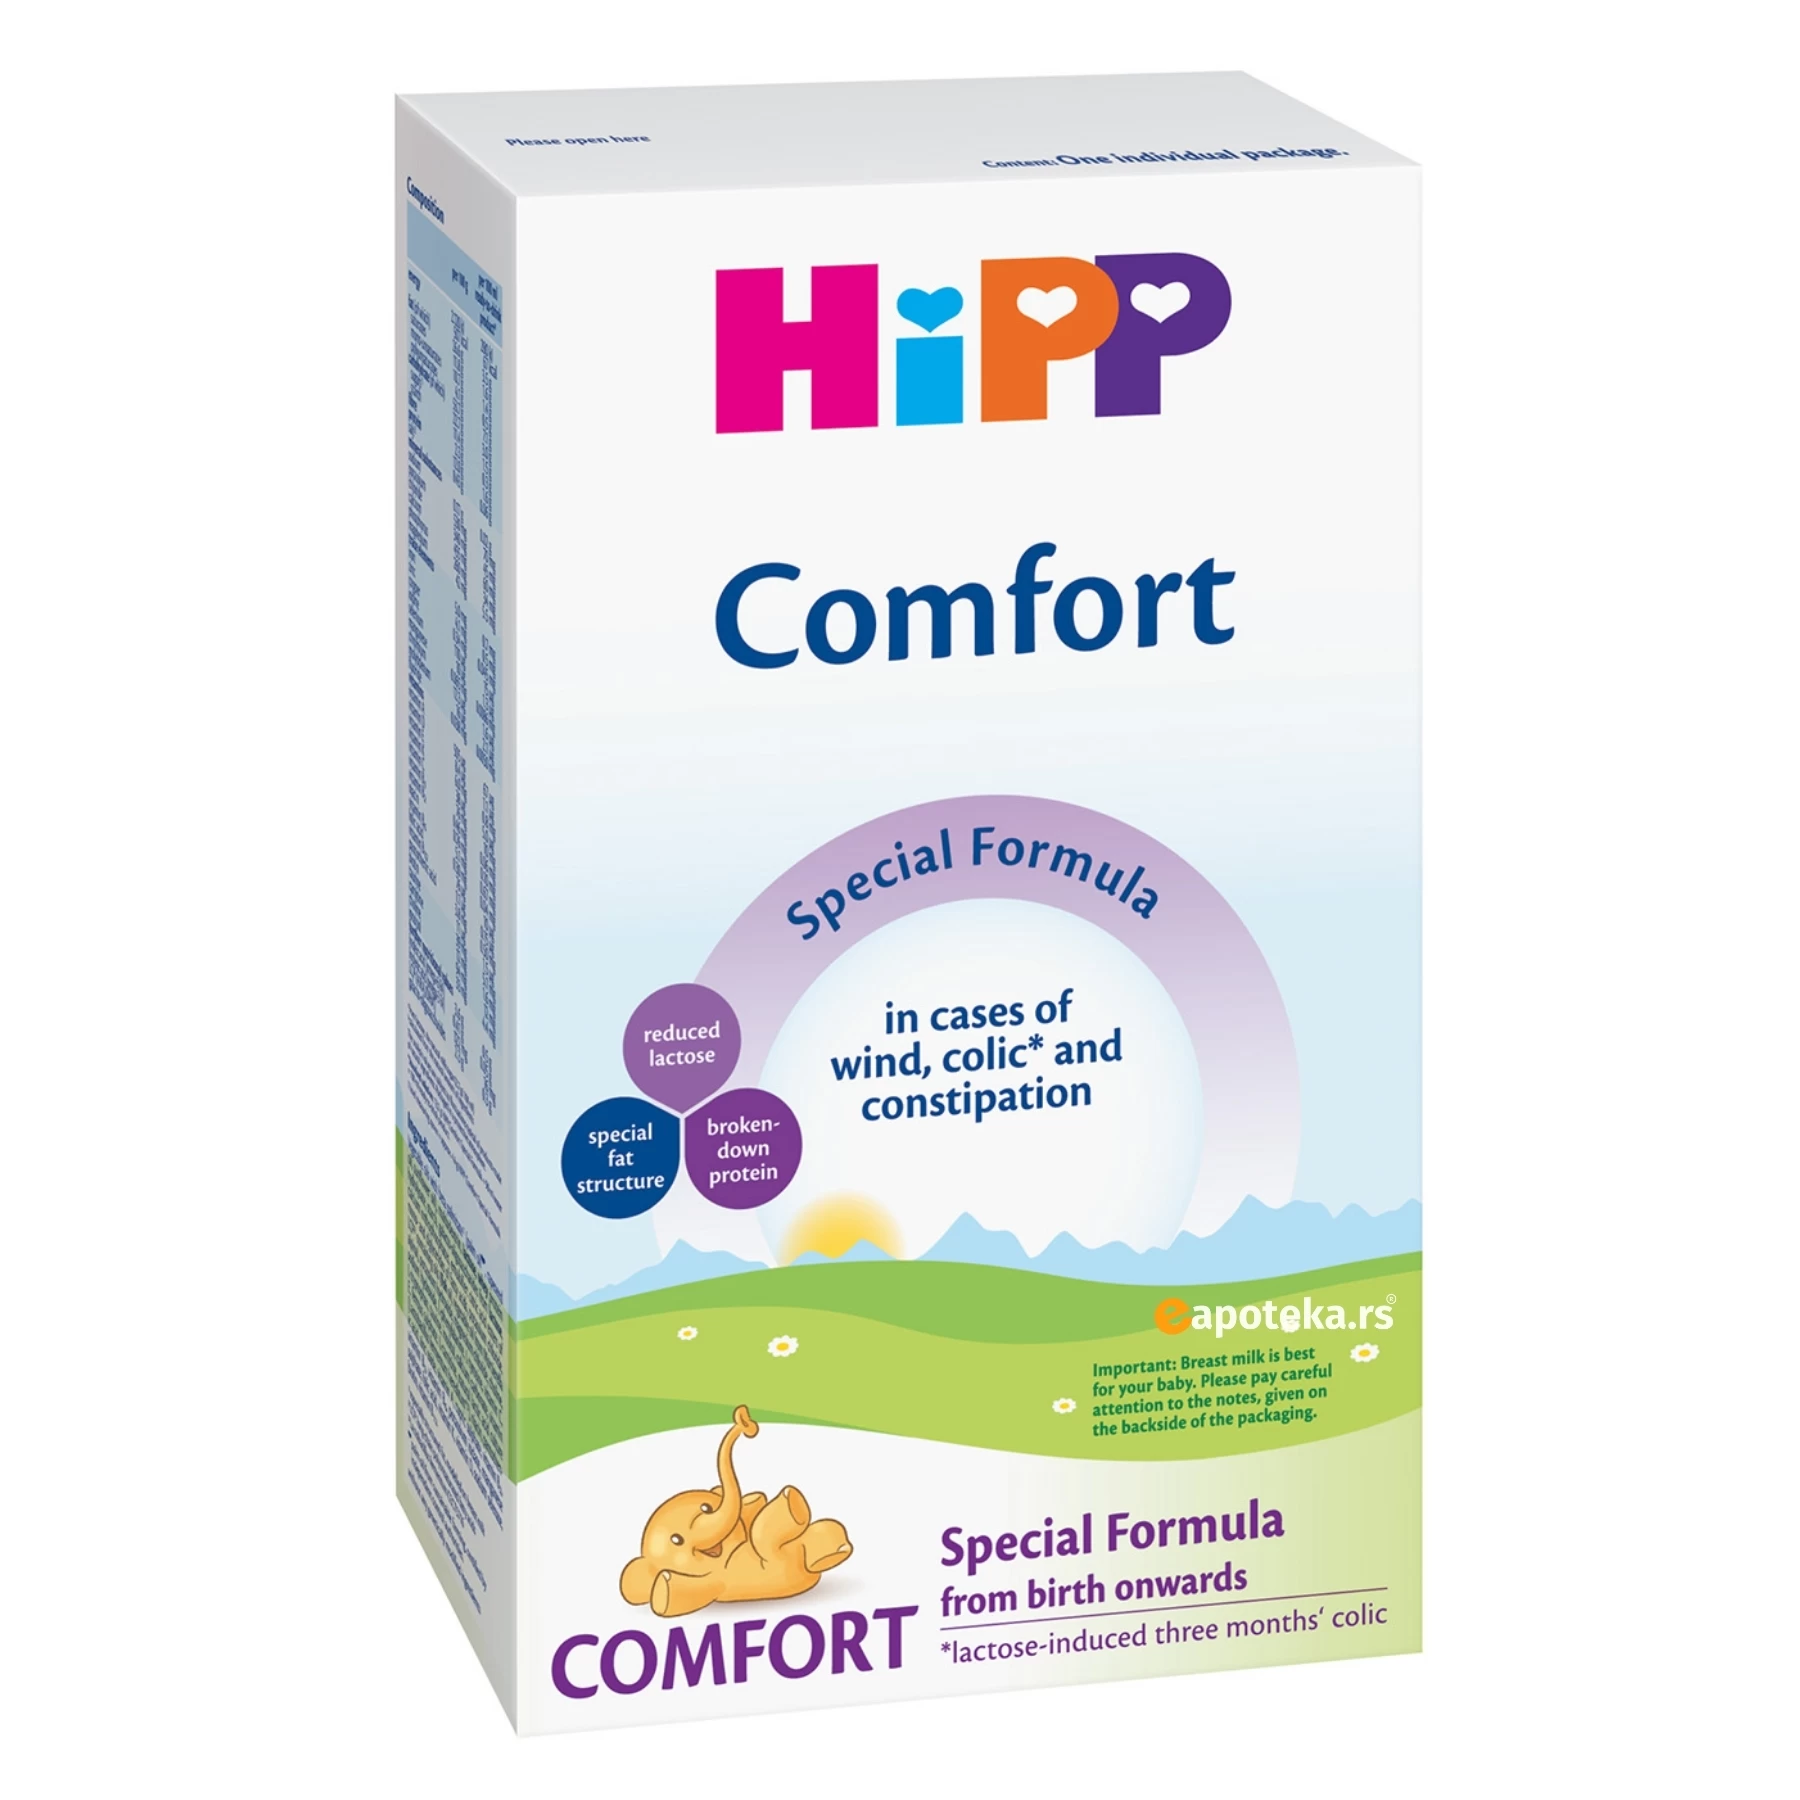 HIPP Mleko za Bebe Comfort 300g